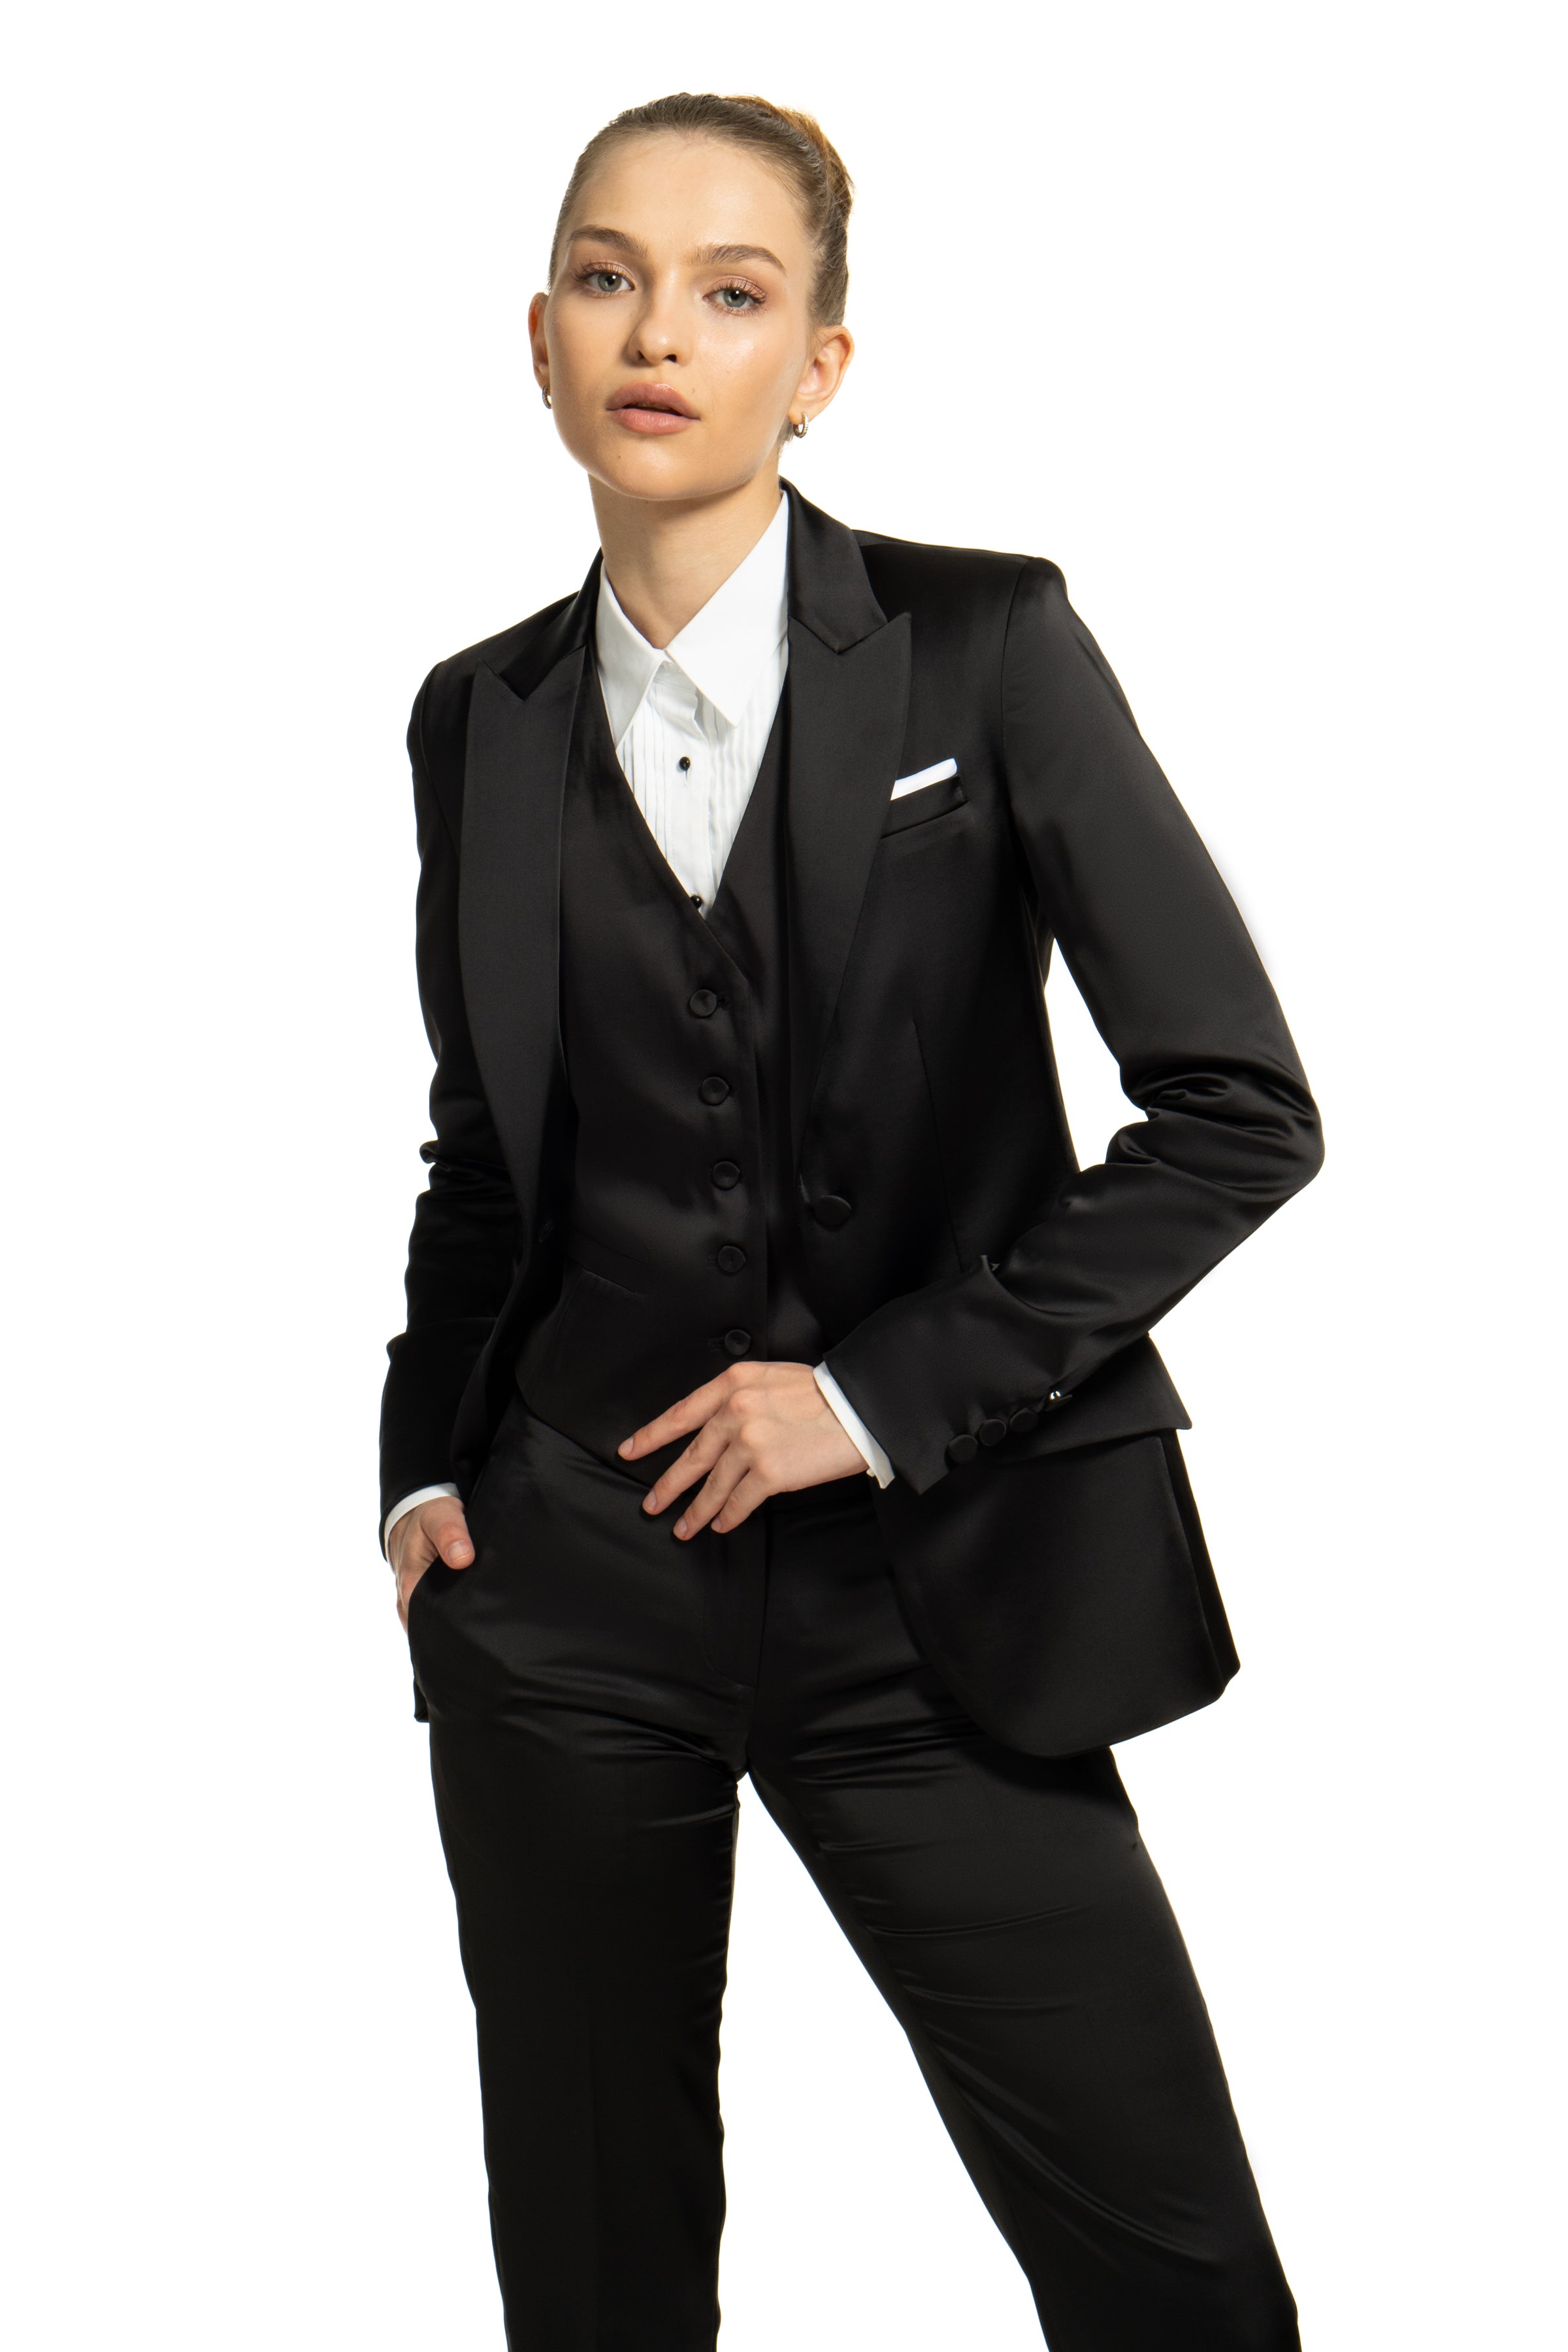 Women's Tuxedo Suits Black & White